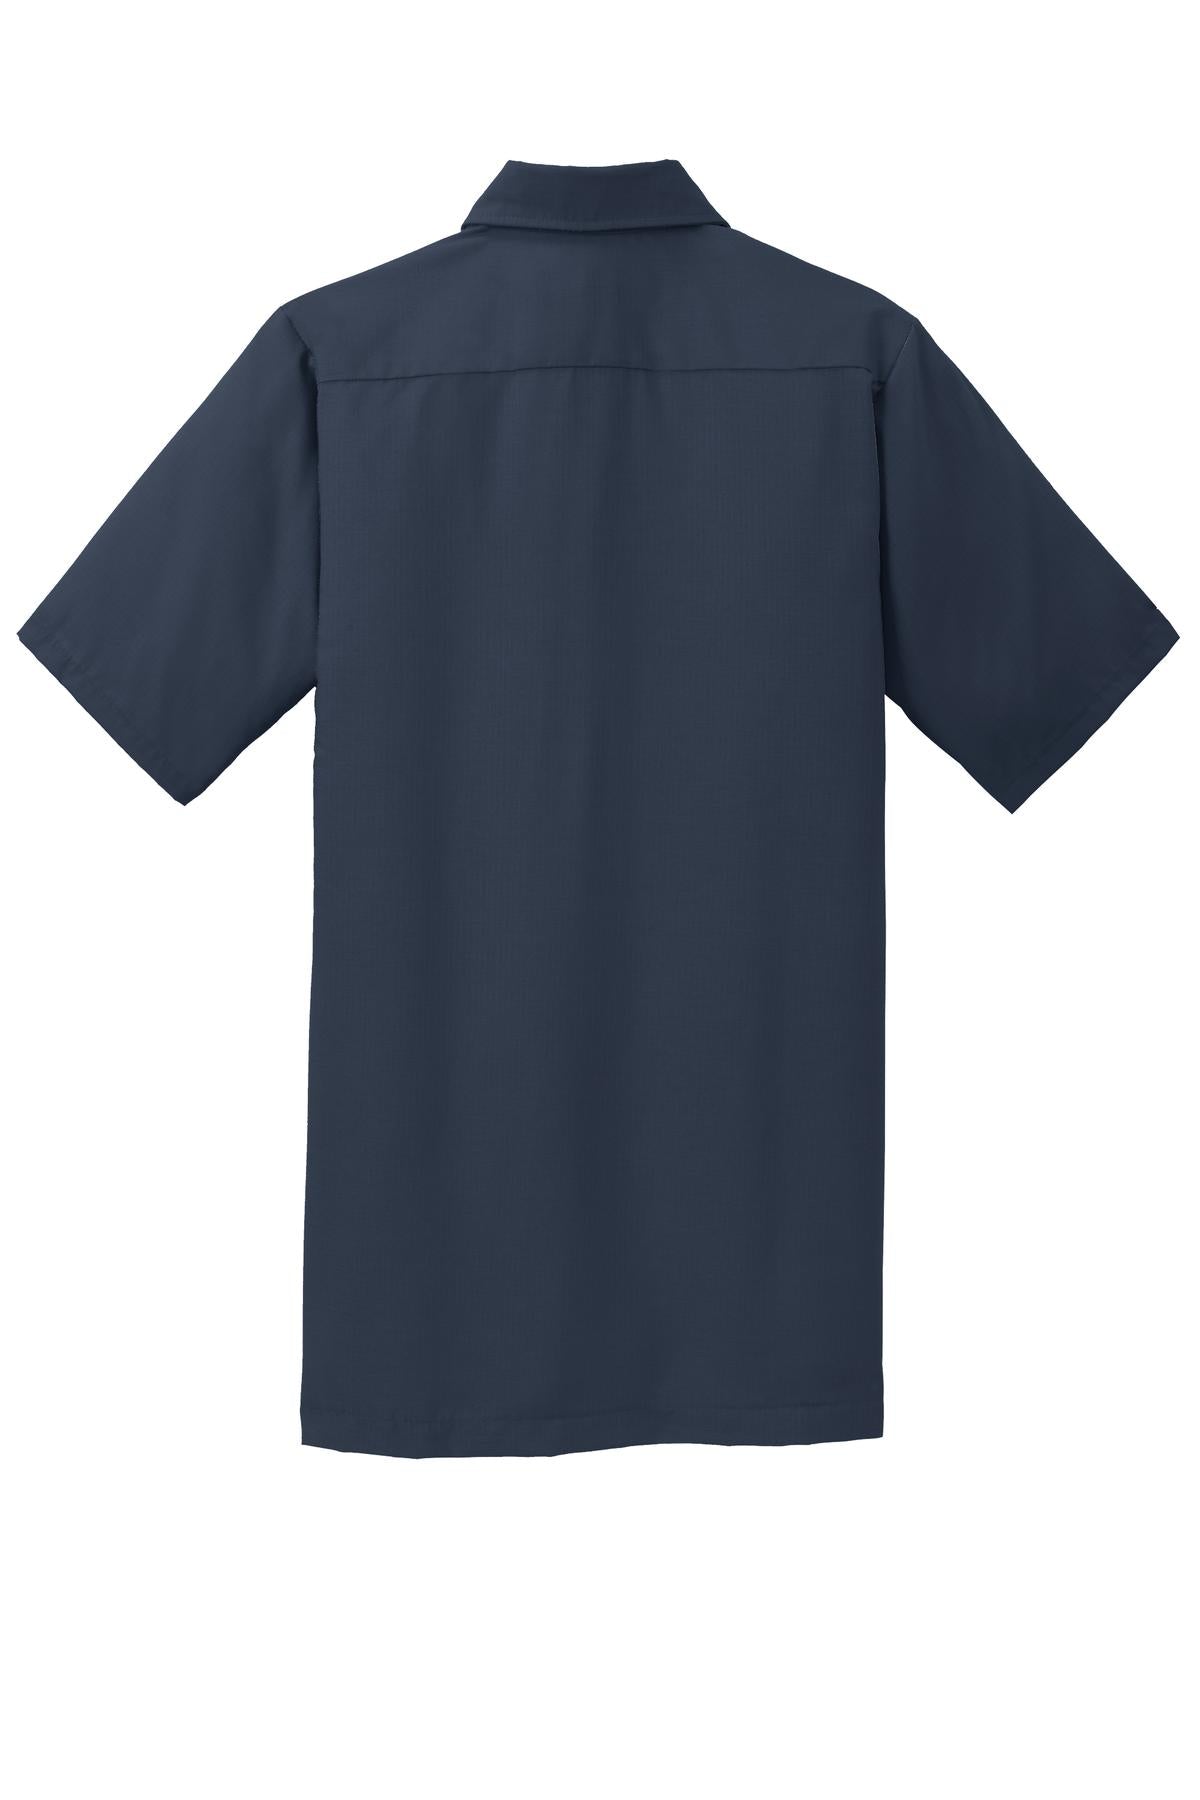 Red Kap Short Sleeve Solid Ripstop Shirt. SY60